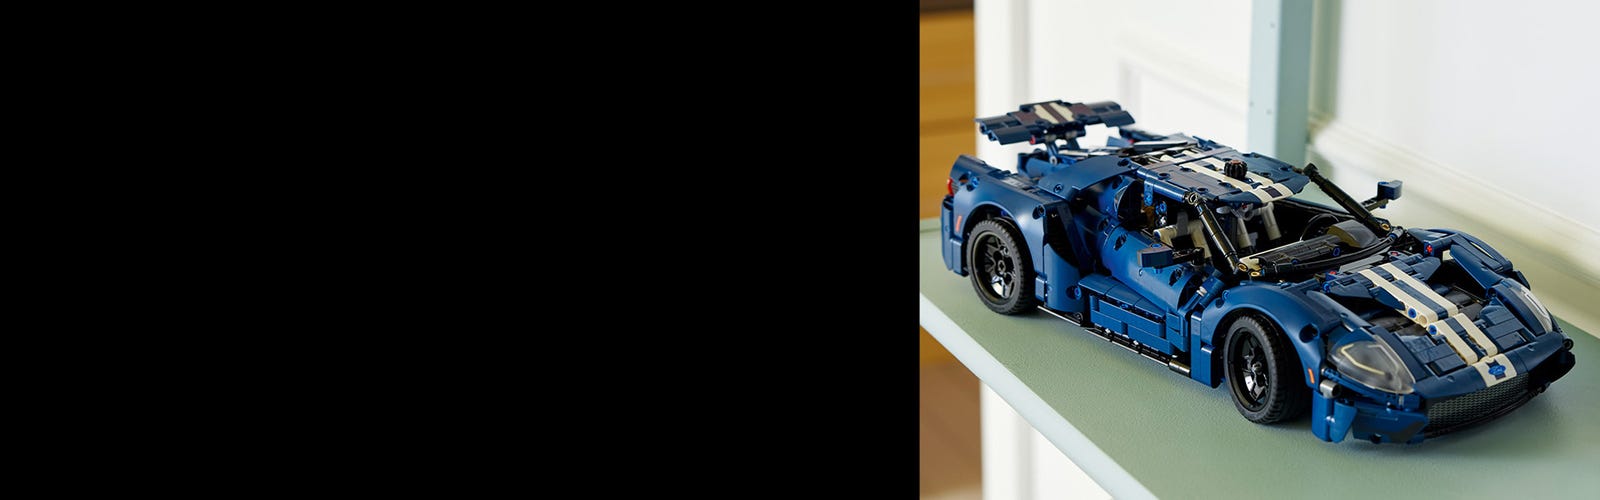 Lego Technic 2022 Ford Gt Car Model Set 42154 : Target